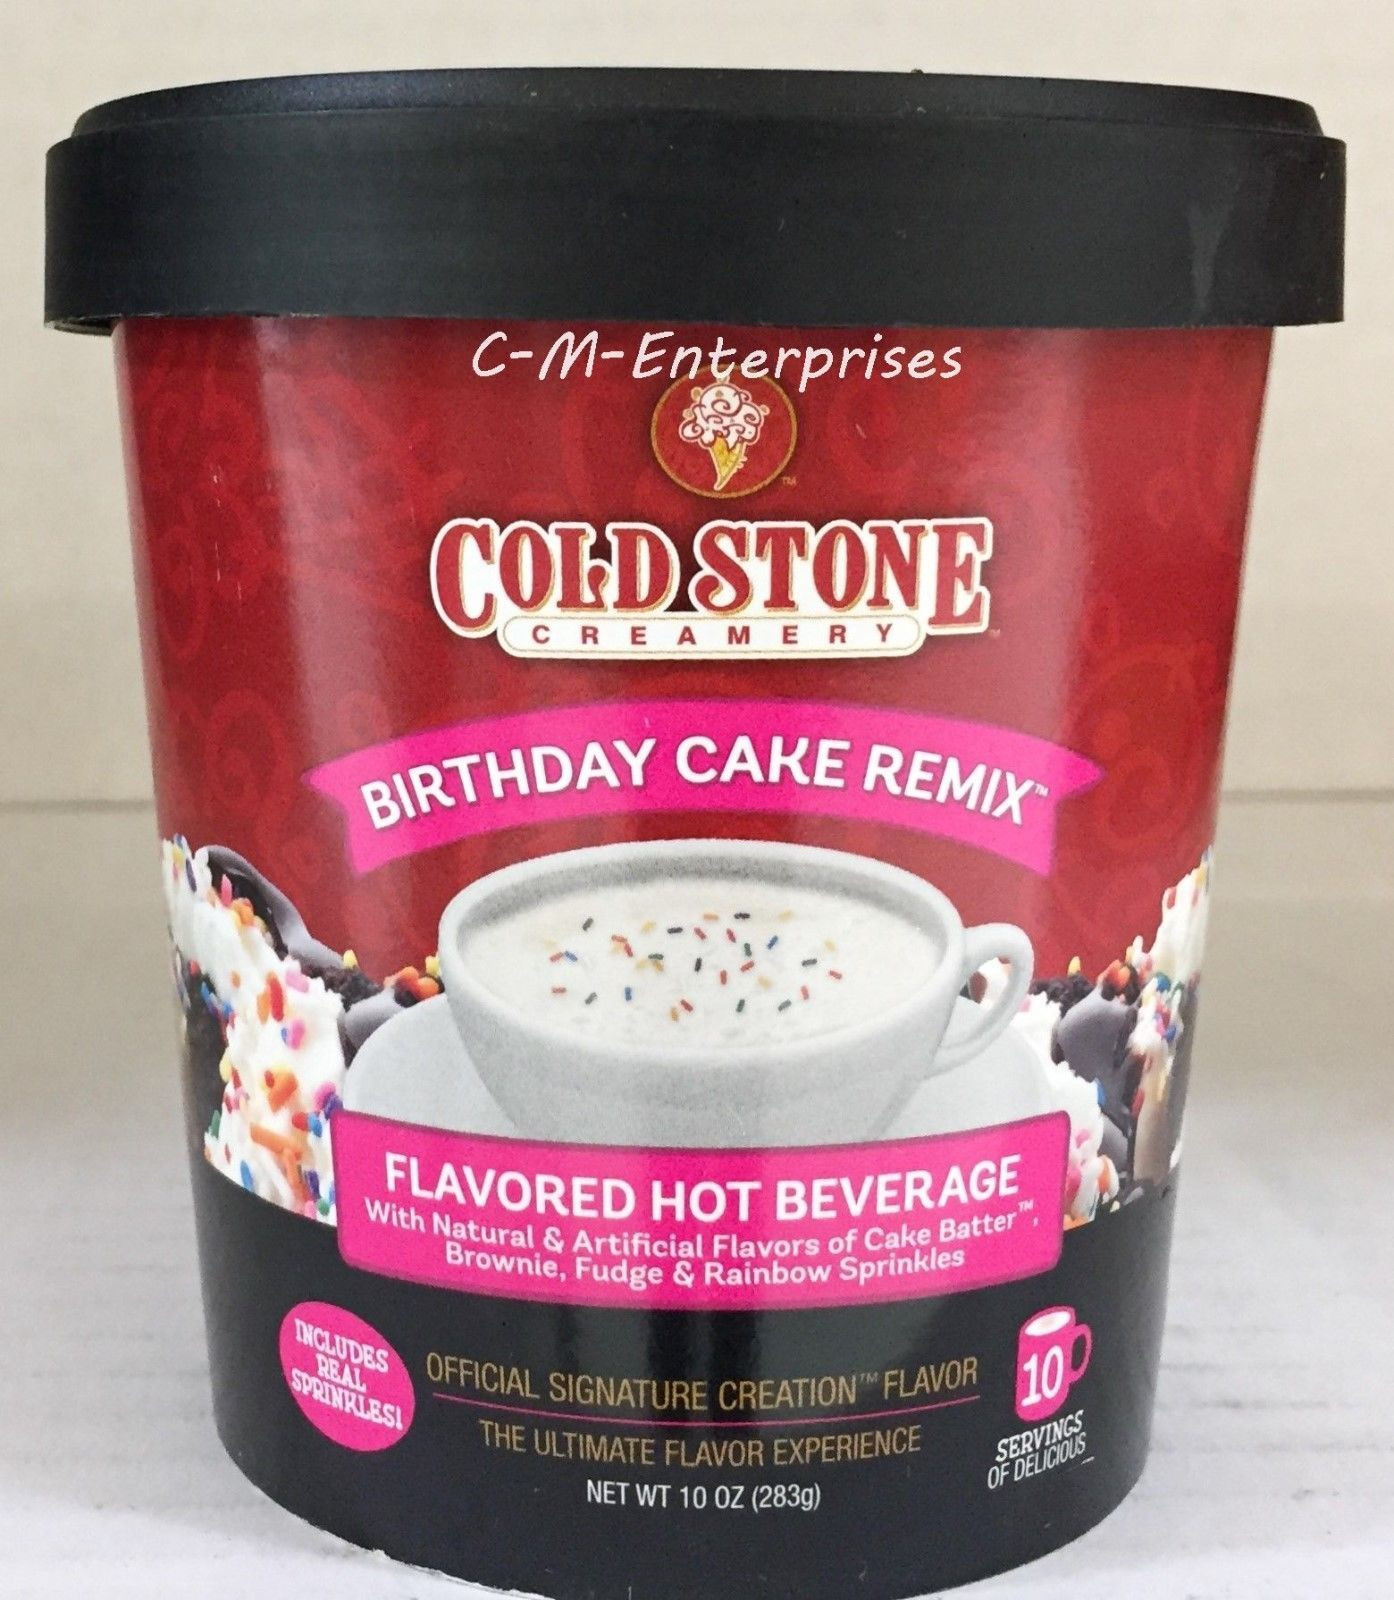 Cold Stone Birthday Cake Remix
 Cold Stone Creamery Birthday Cake Remix Flavored Hot